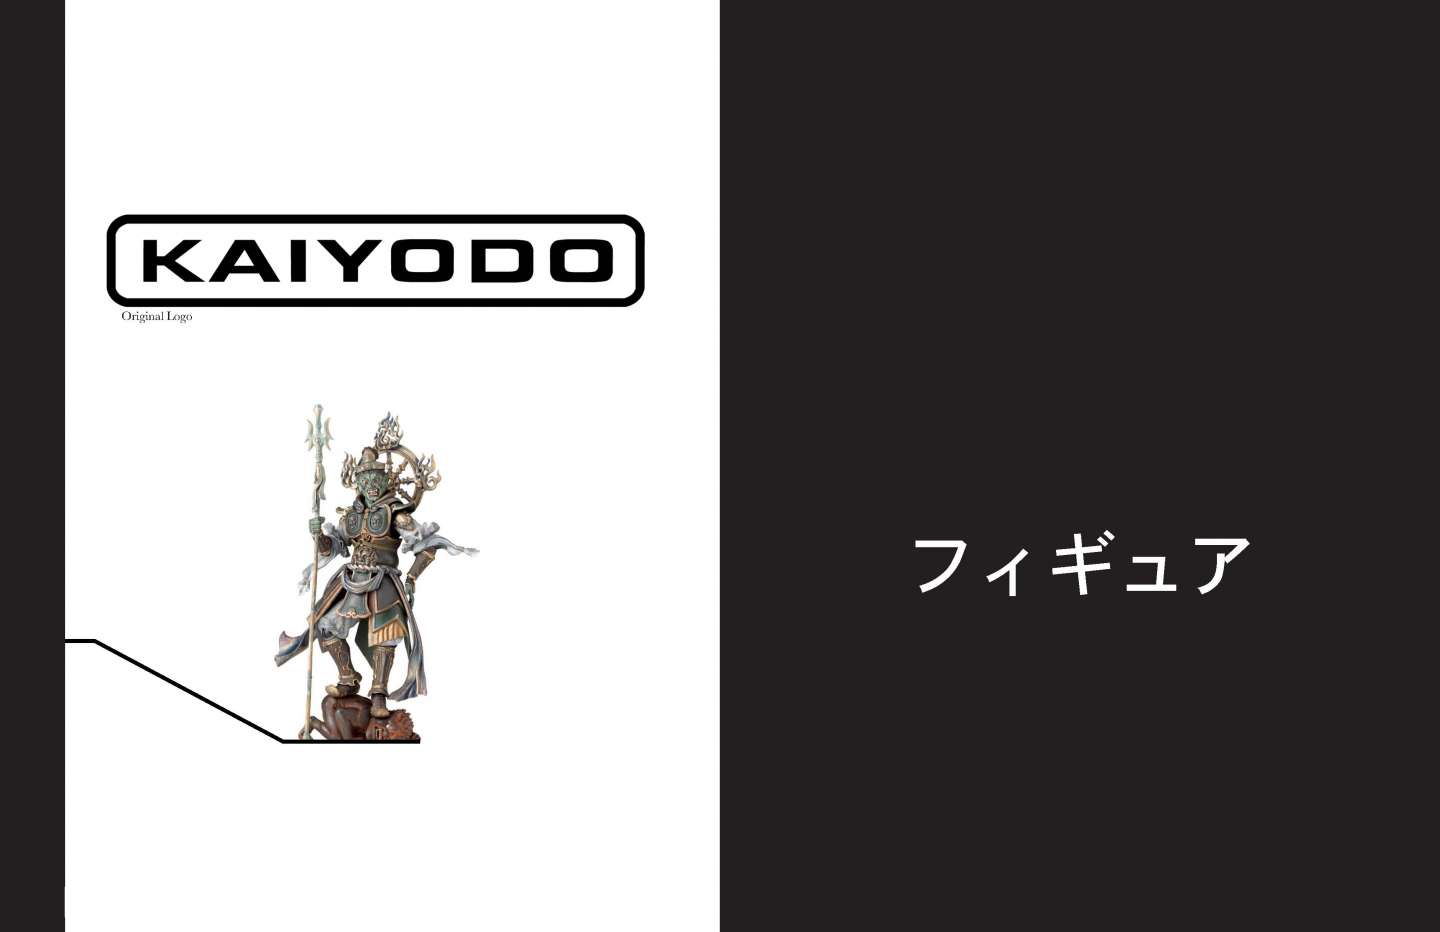 Kaiyoda logo re-brand